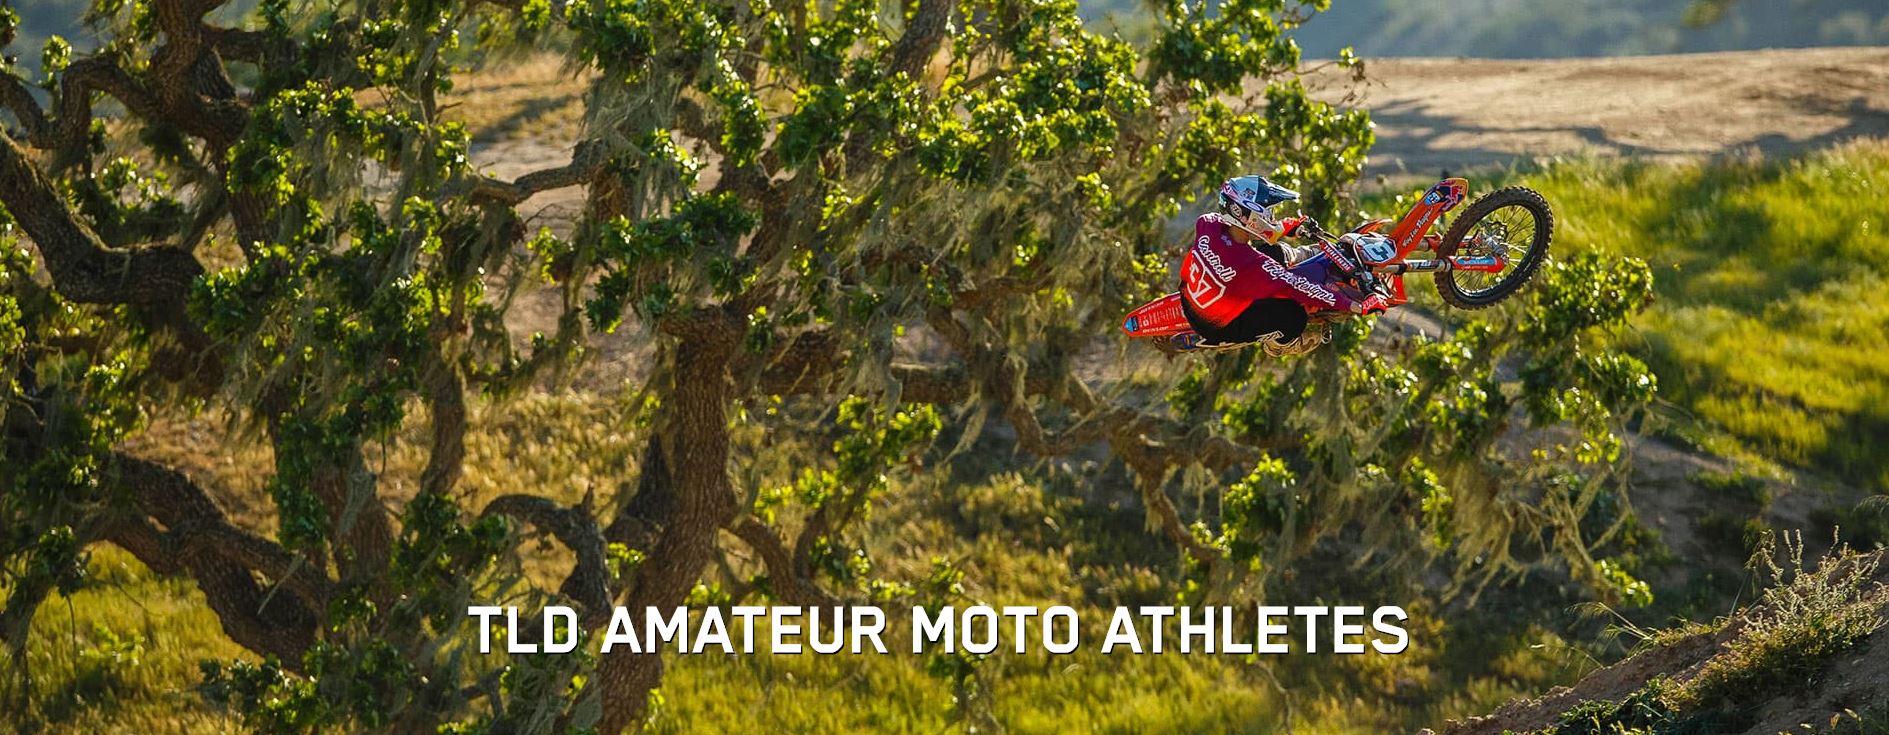 Troy Lee Designs Amateur Motorcycle MX Athletes Sponsored Team 2016